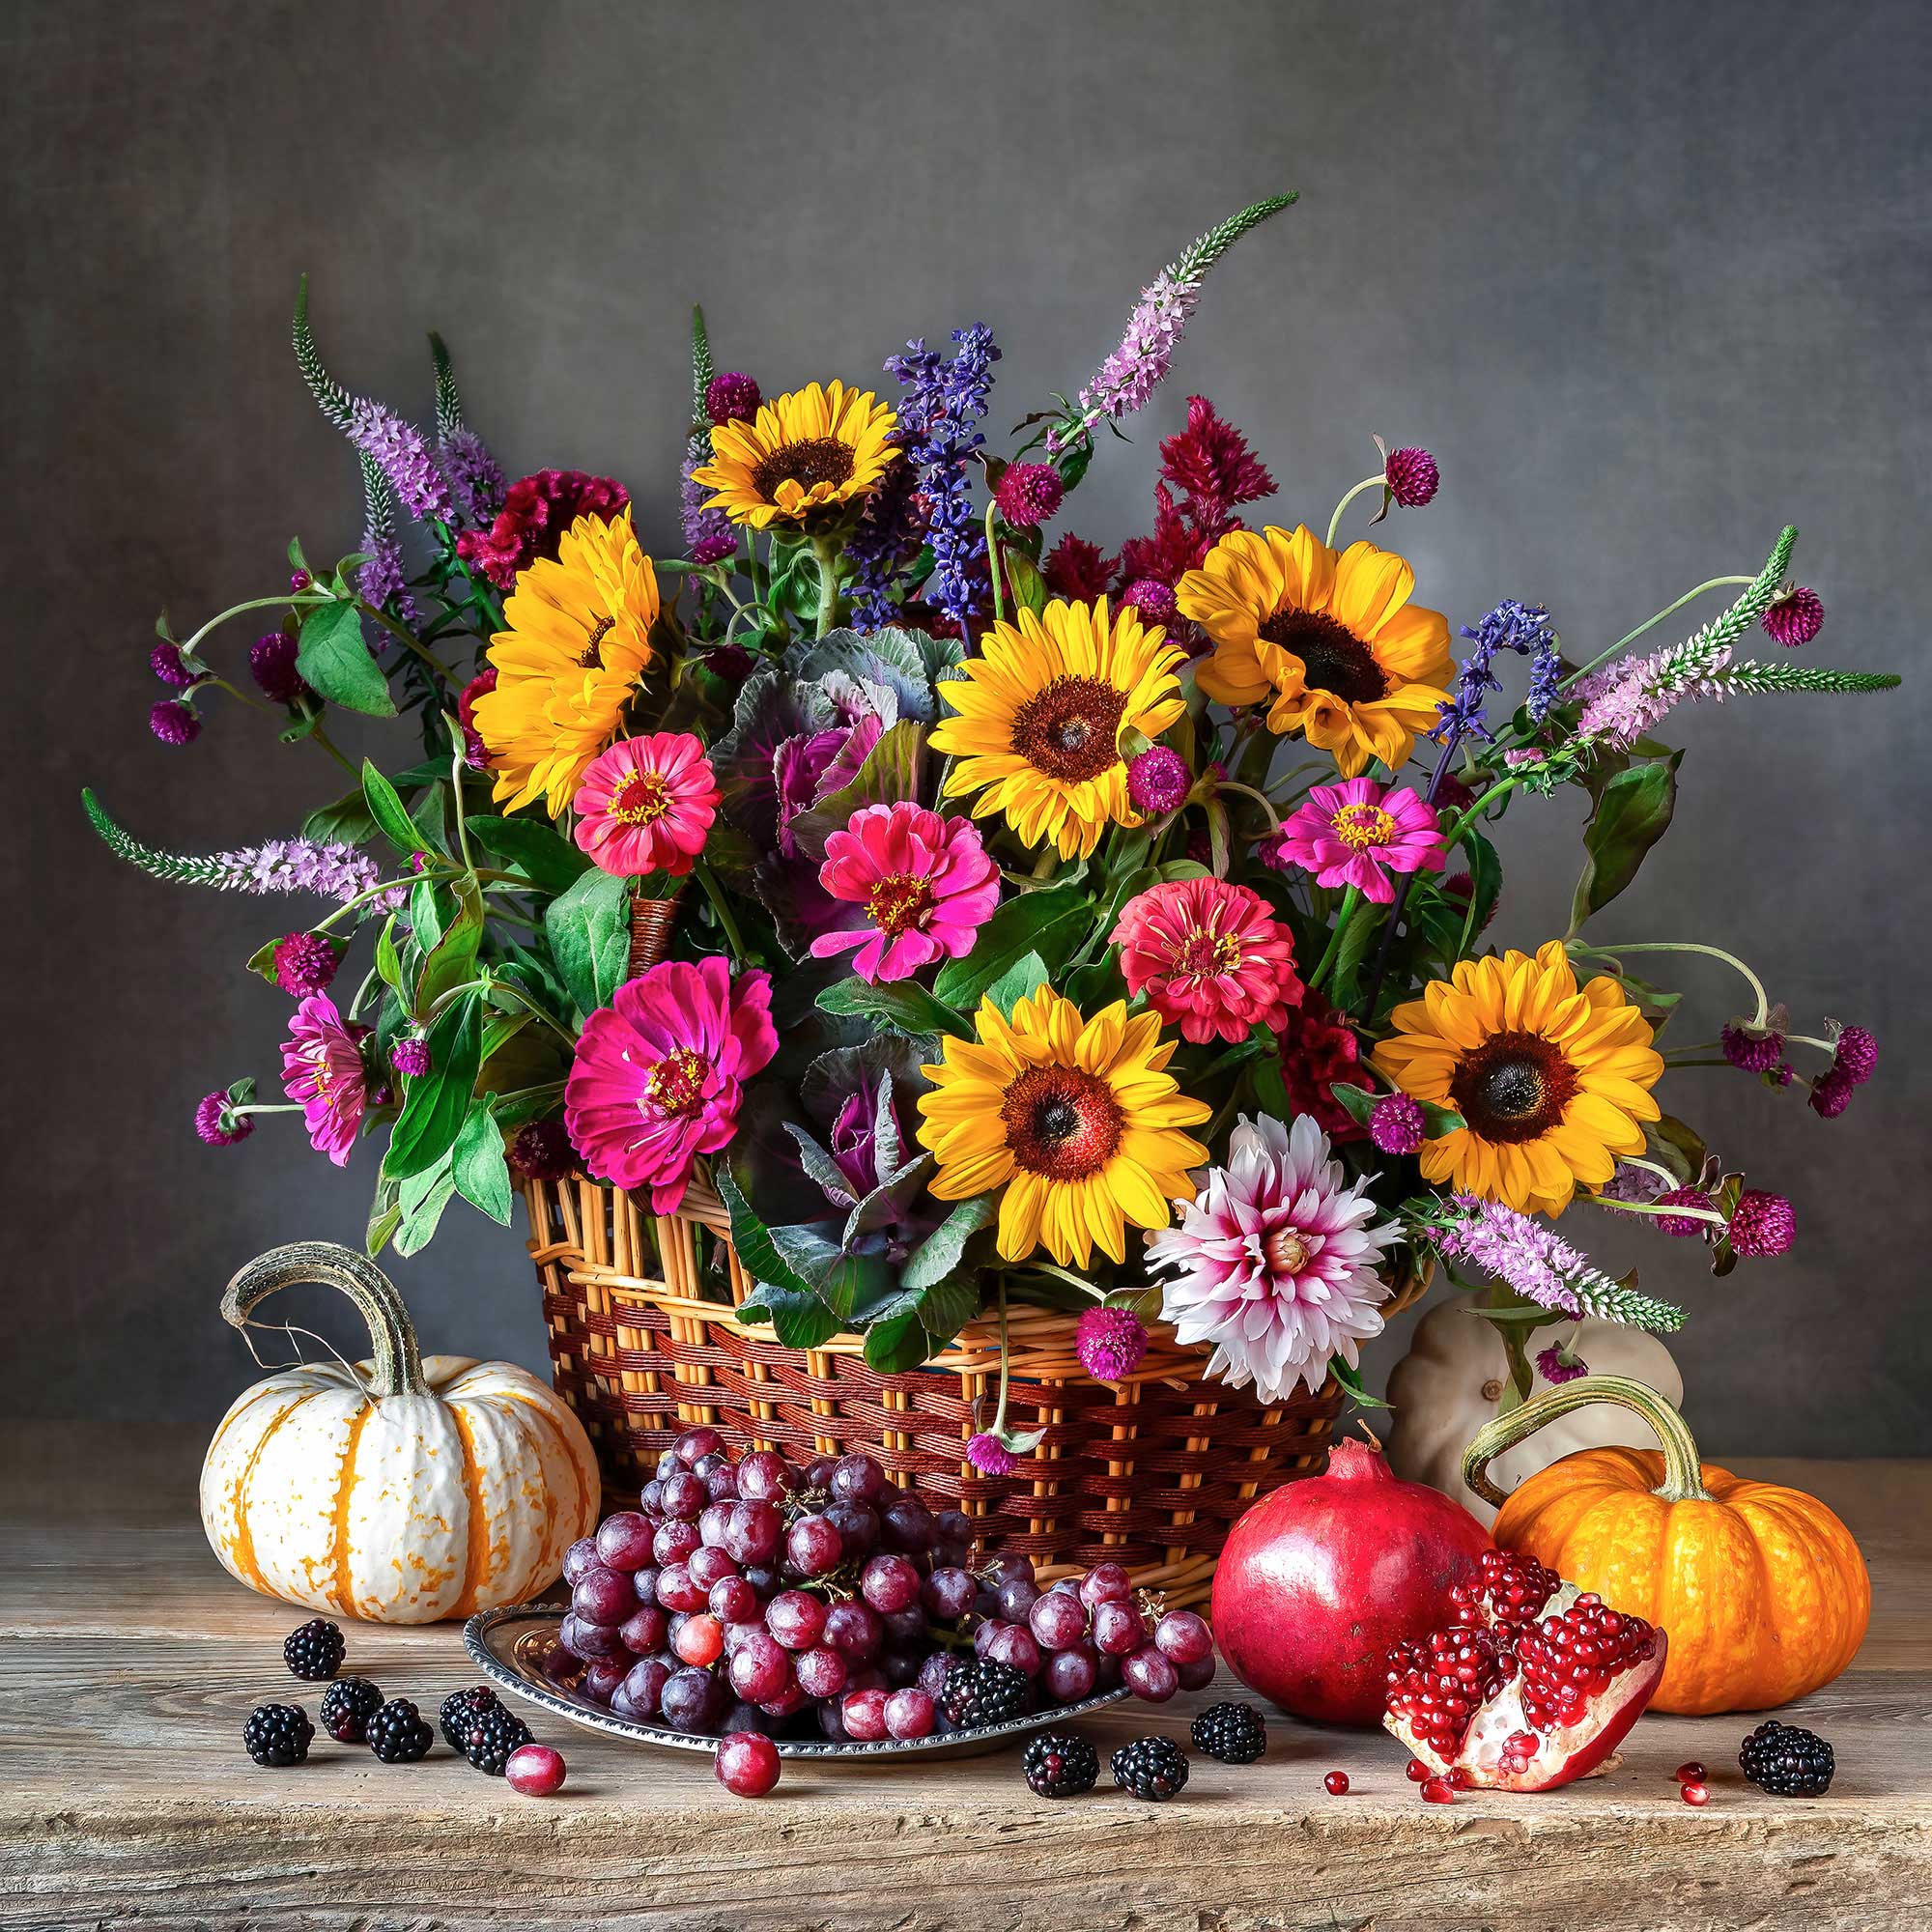 sunflowers, flowers, pumpkins, grapes, pomegranates, autumn, rustic, vibrant fall season, Слуцкая Яна